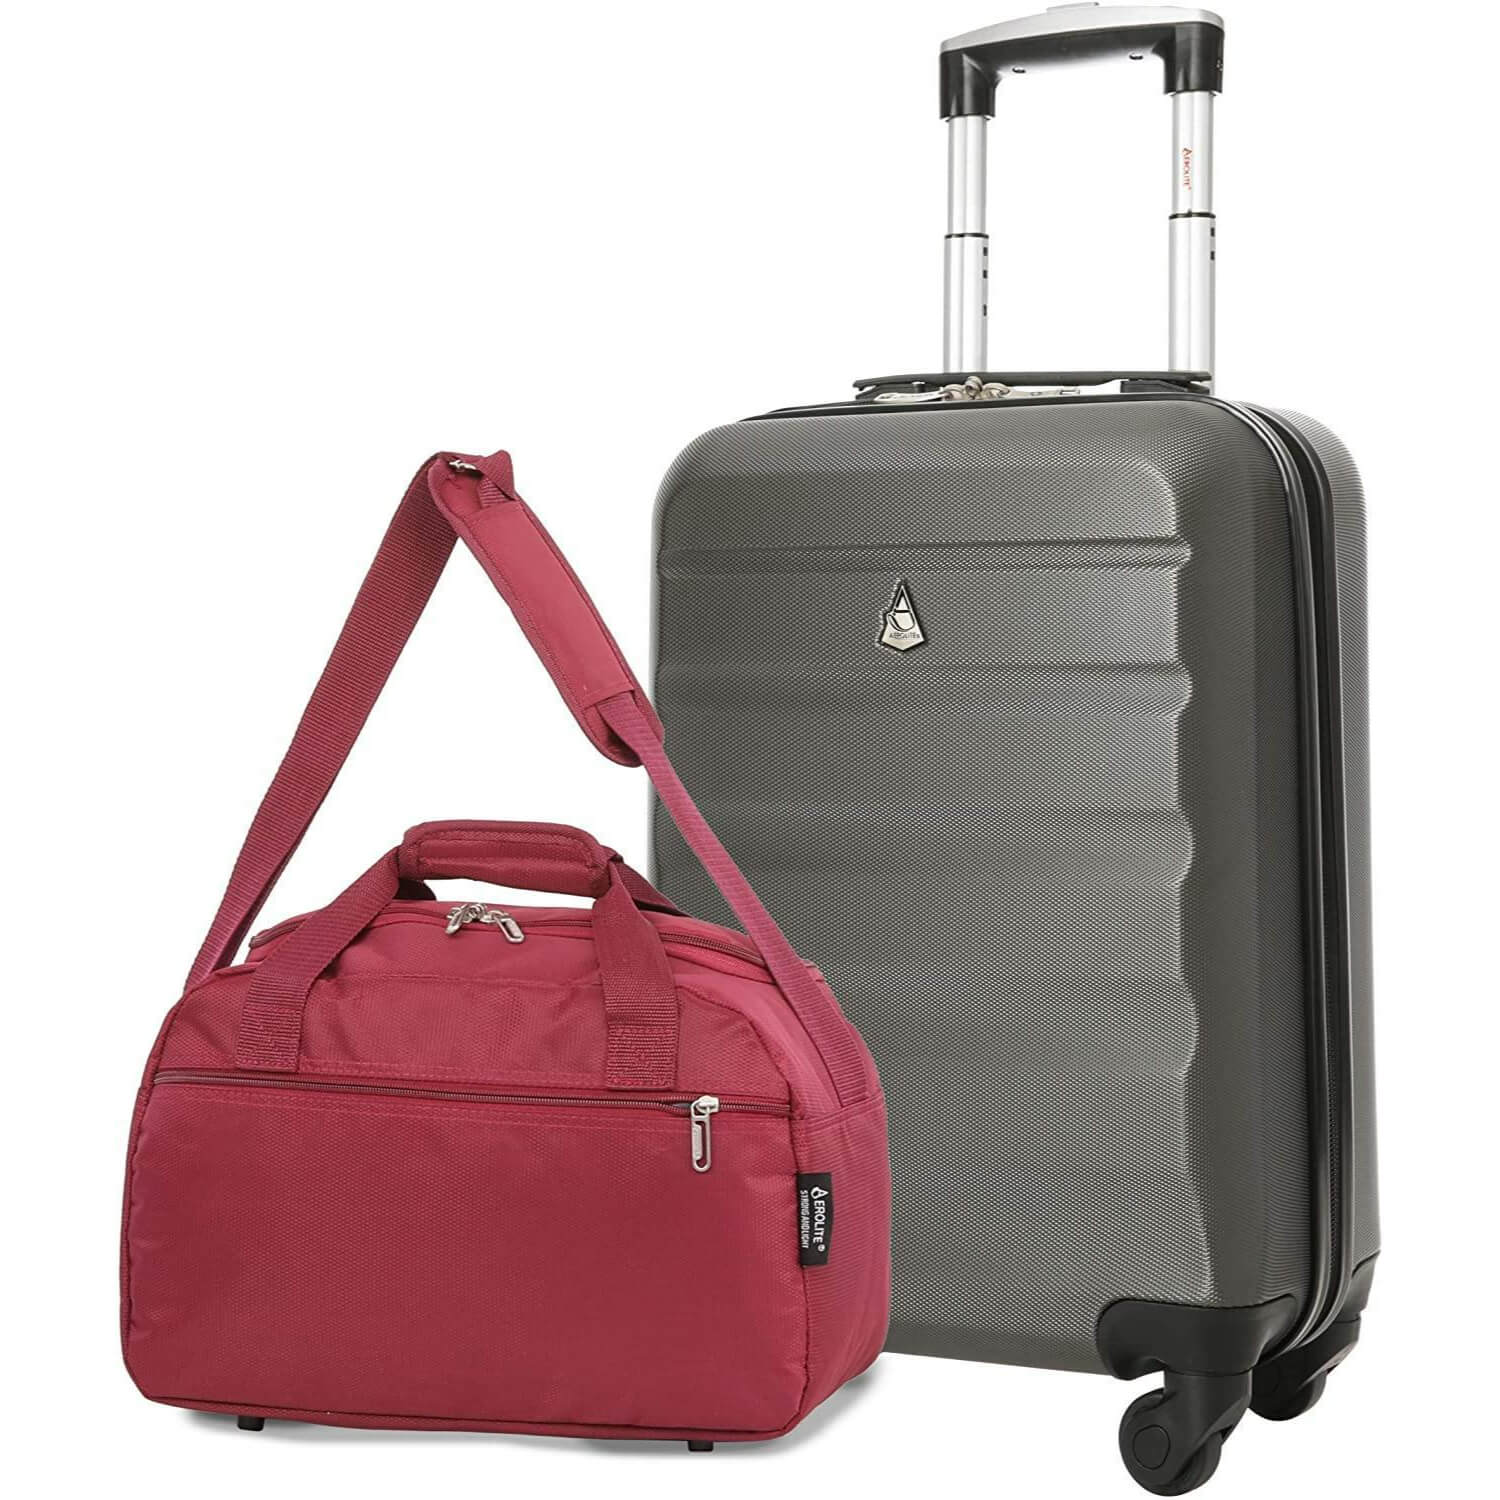 Aerolite Ryanair Bundle (55x35x20cm) Lightweight ABS Hard Shell Travel Carry On Cabin Suitcase + (40x20x25cm) Ryanair MAXIMUM Sized Holdall Cabin Bag